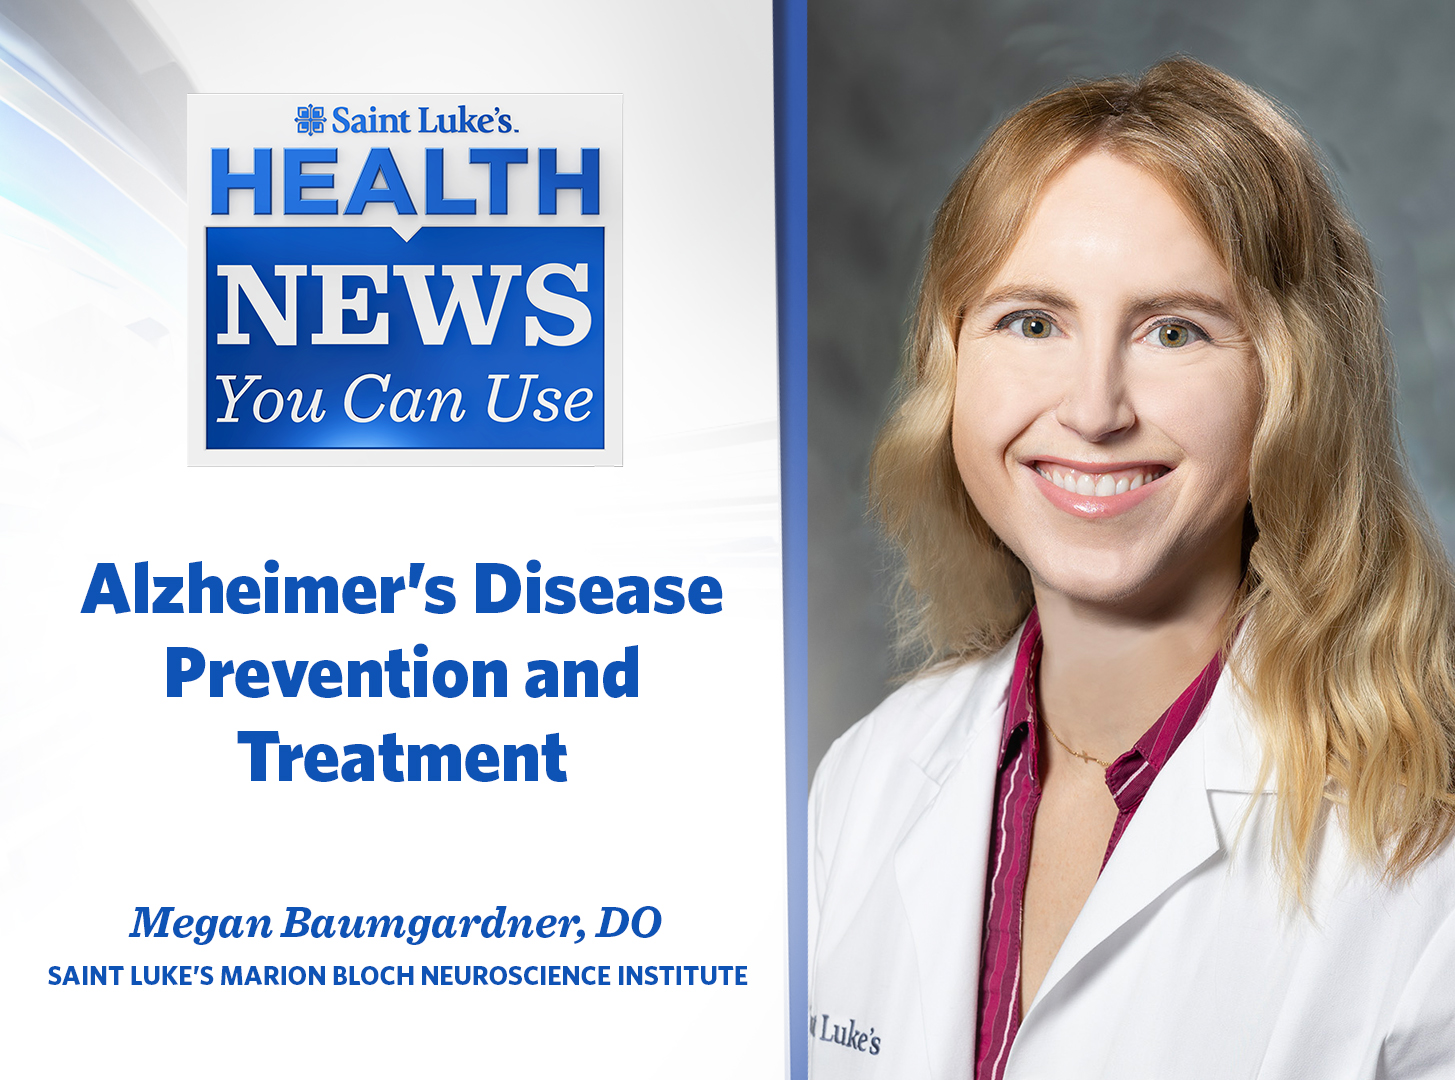 Helpful Health News: Preventing and Treating Alzheimer's Disease